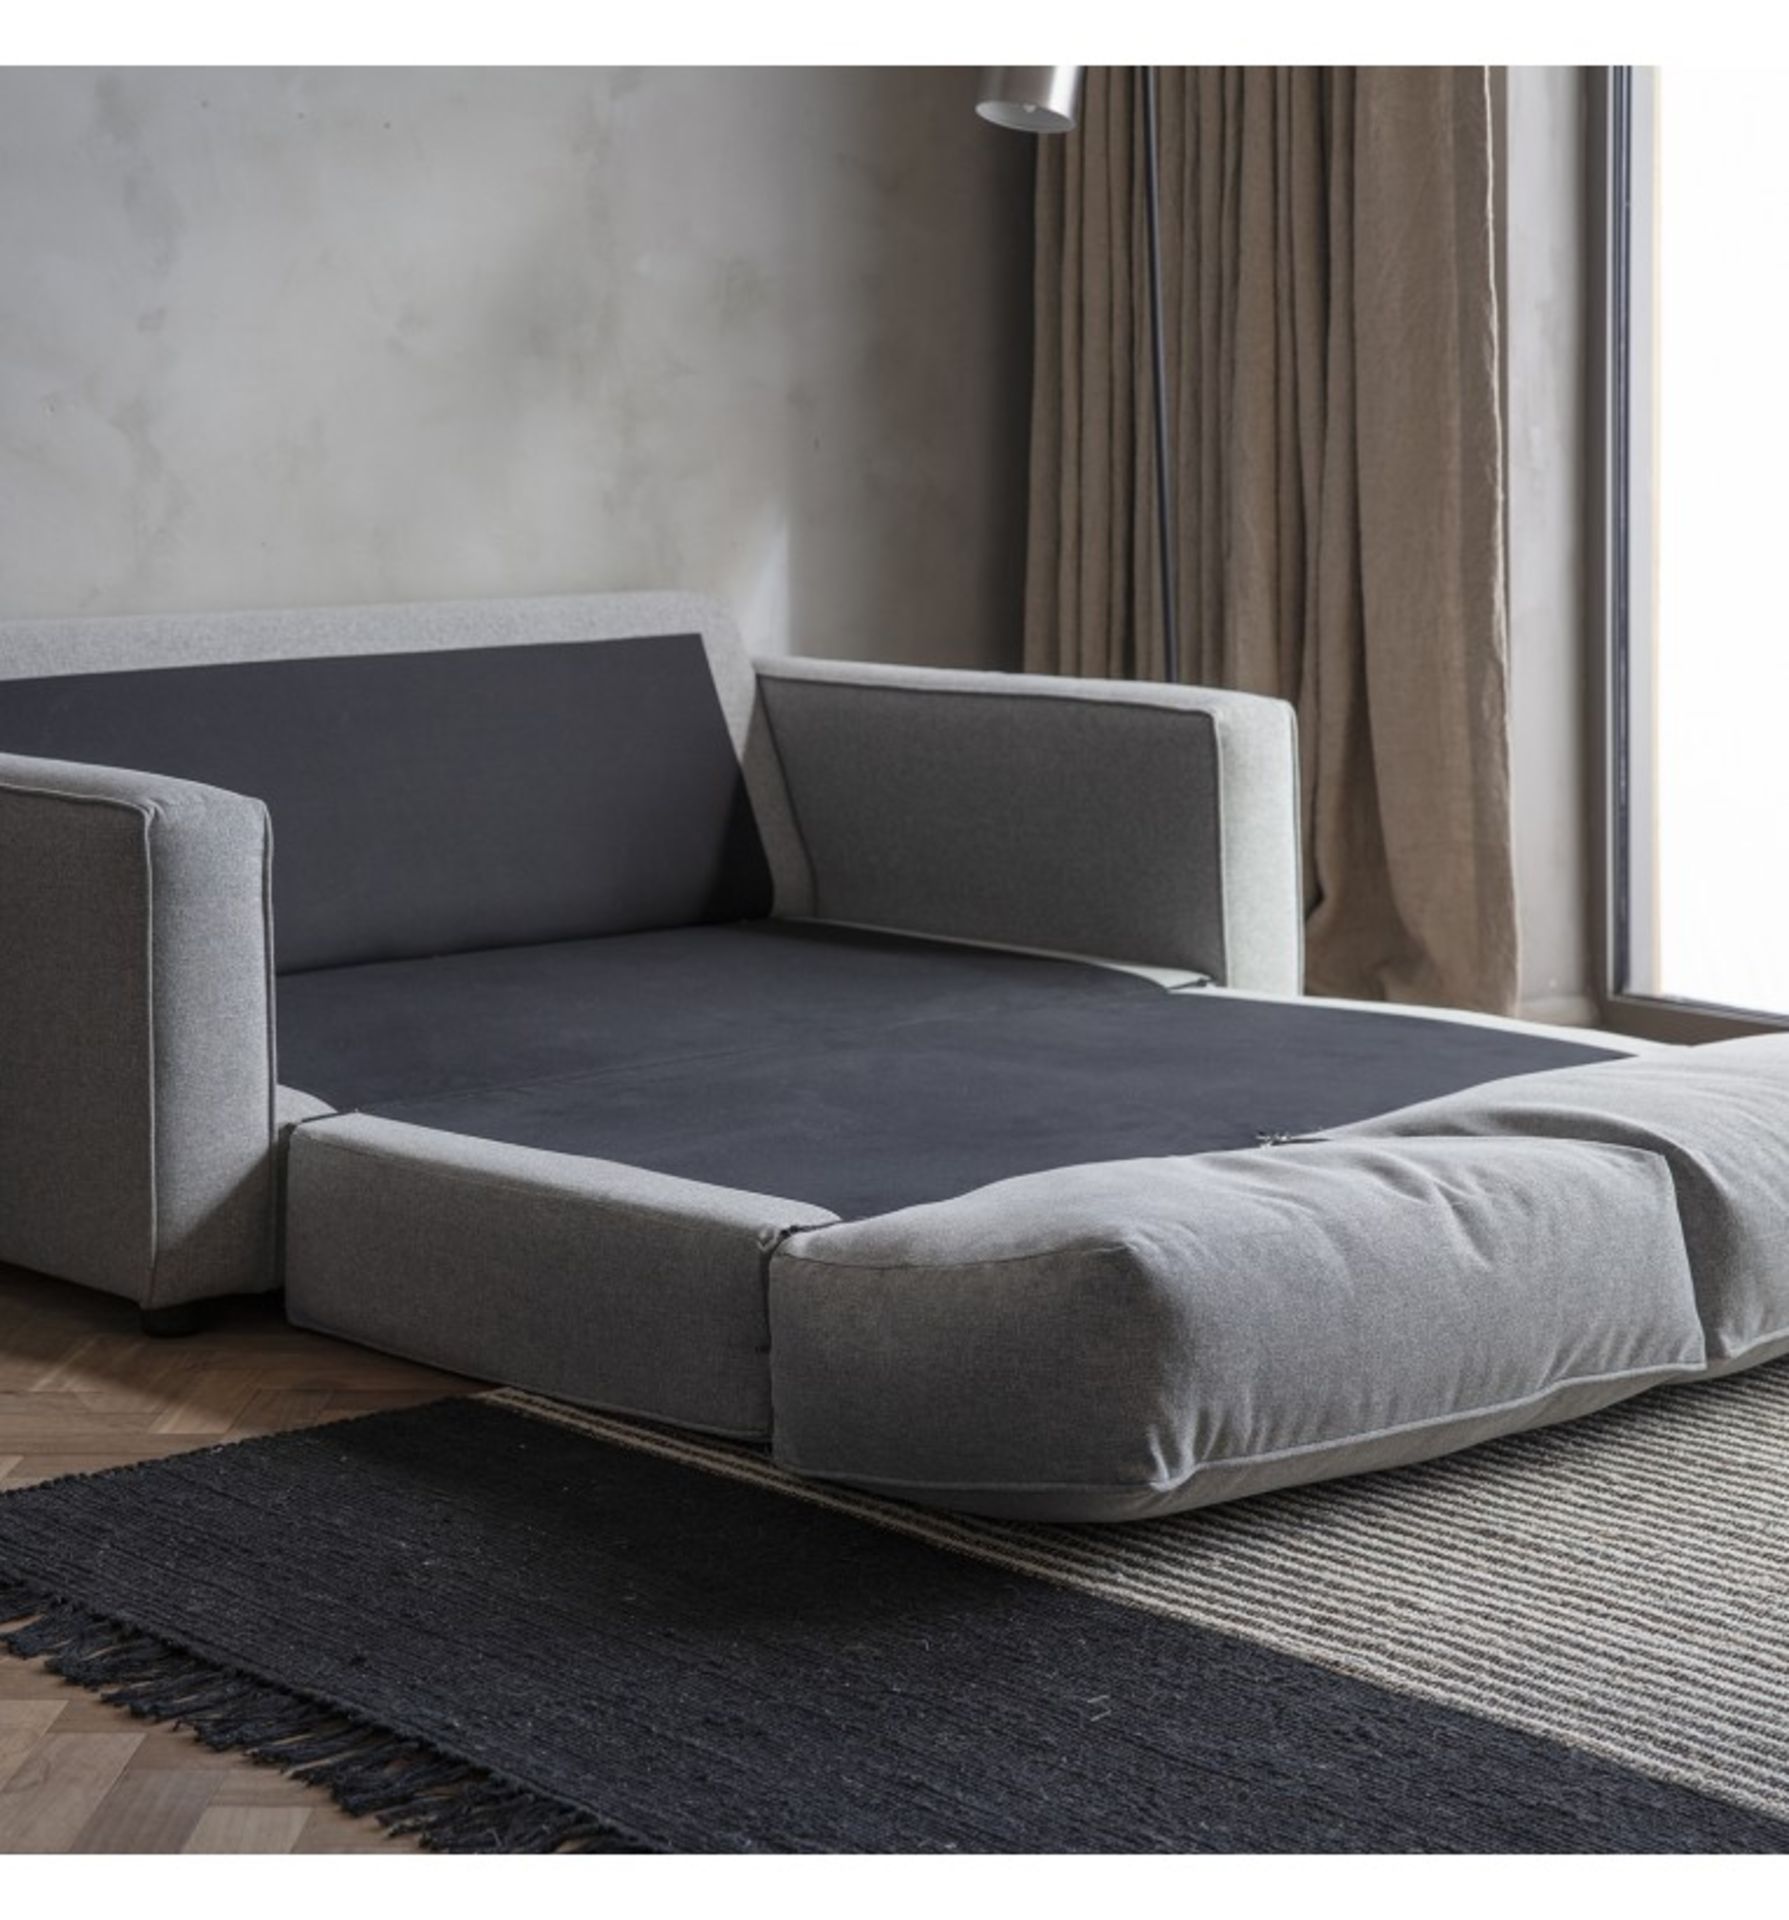 Sofa - Image 2 of 2